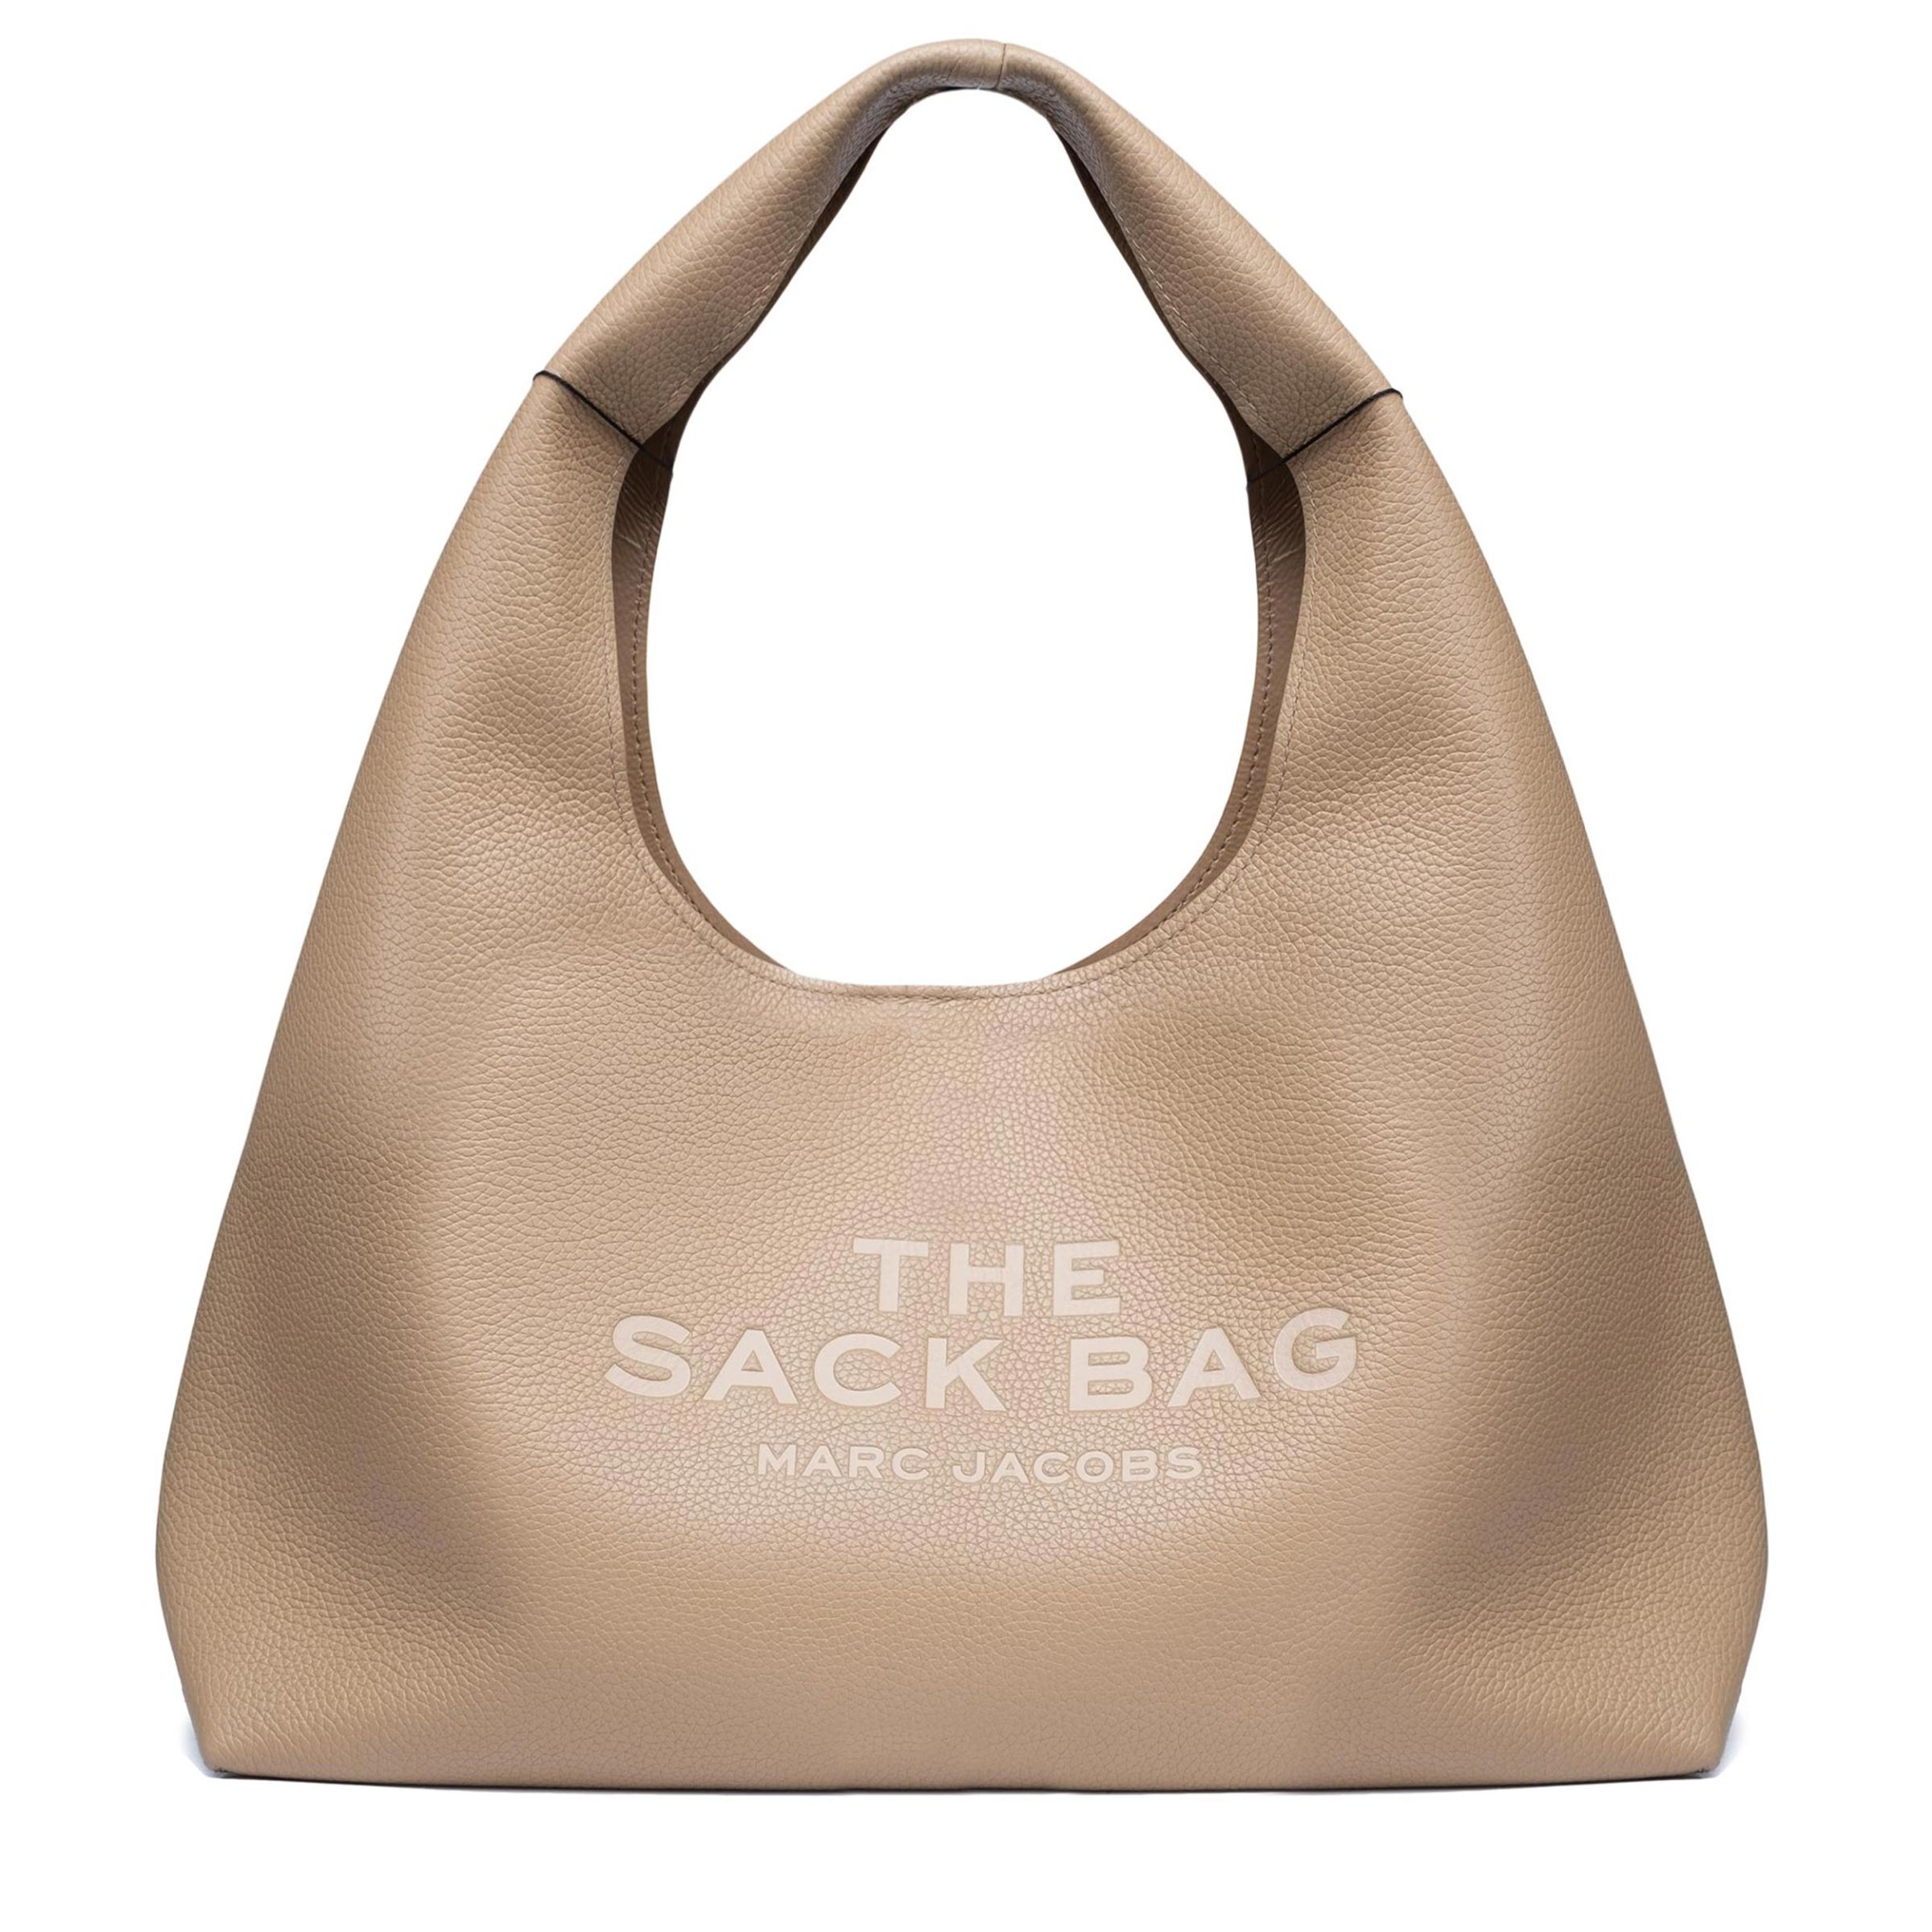 Сумка Marc Jacobs The Sack Bag бежева